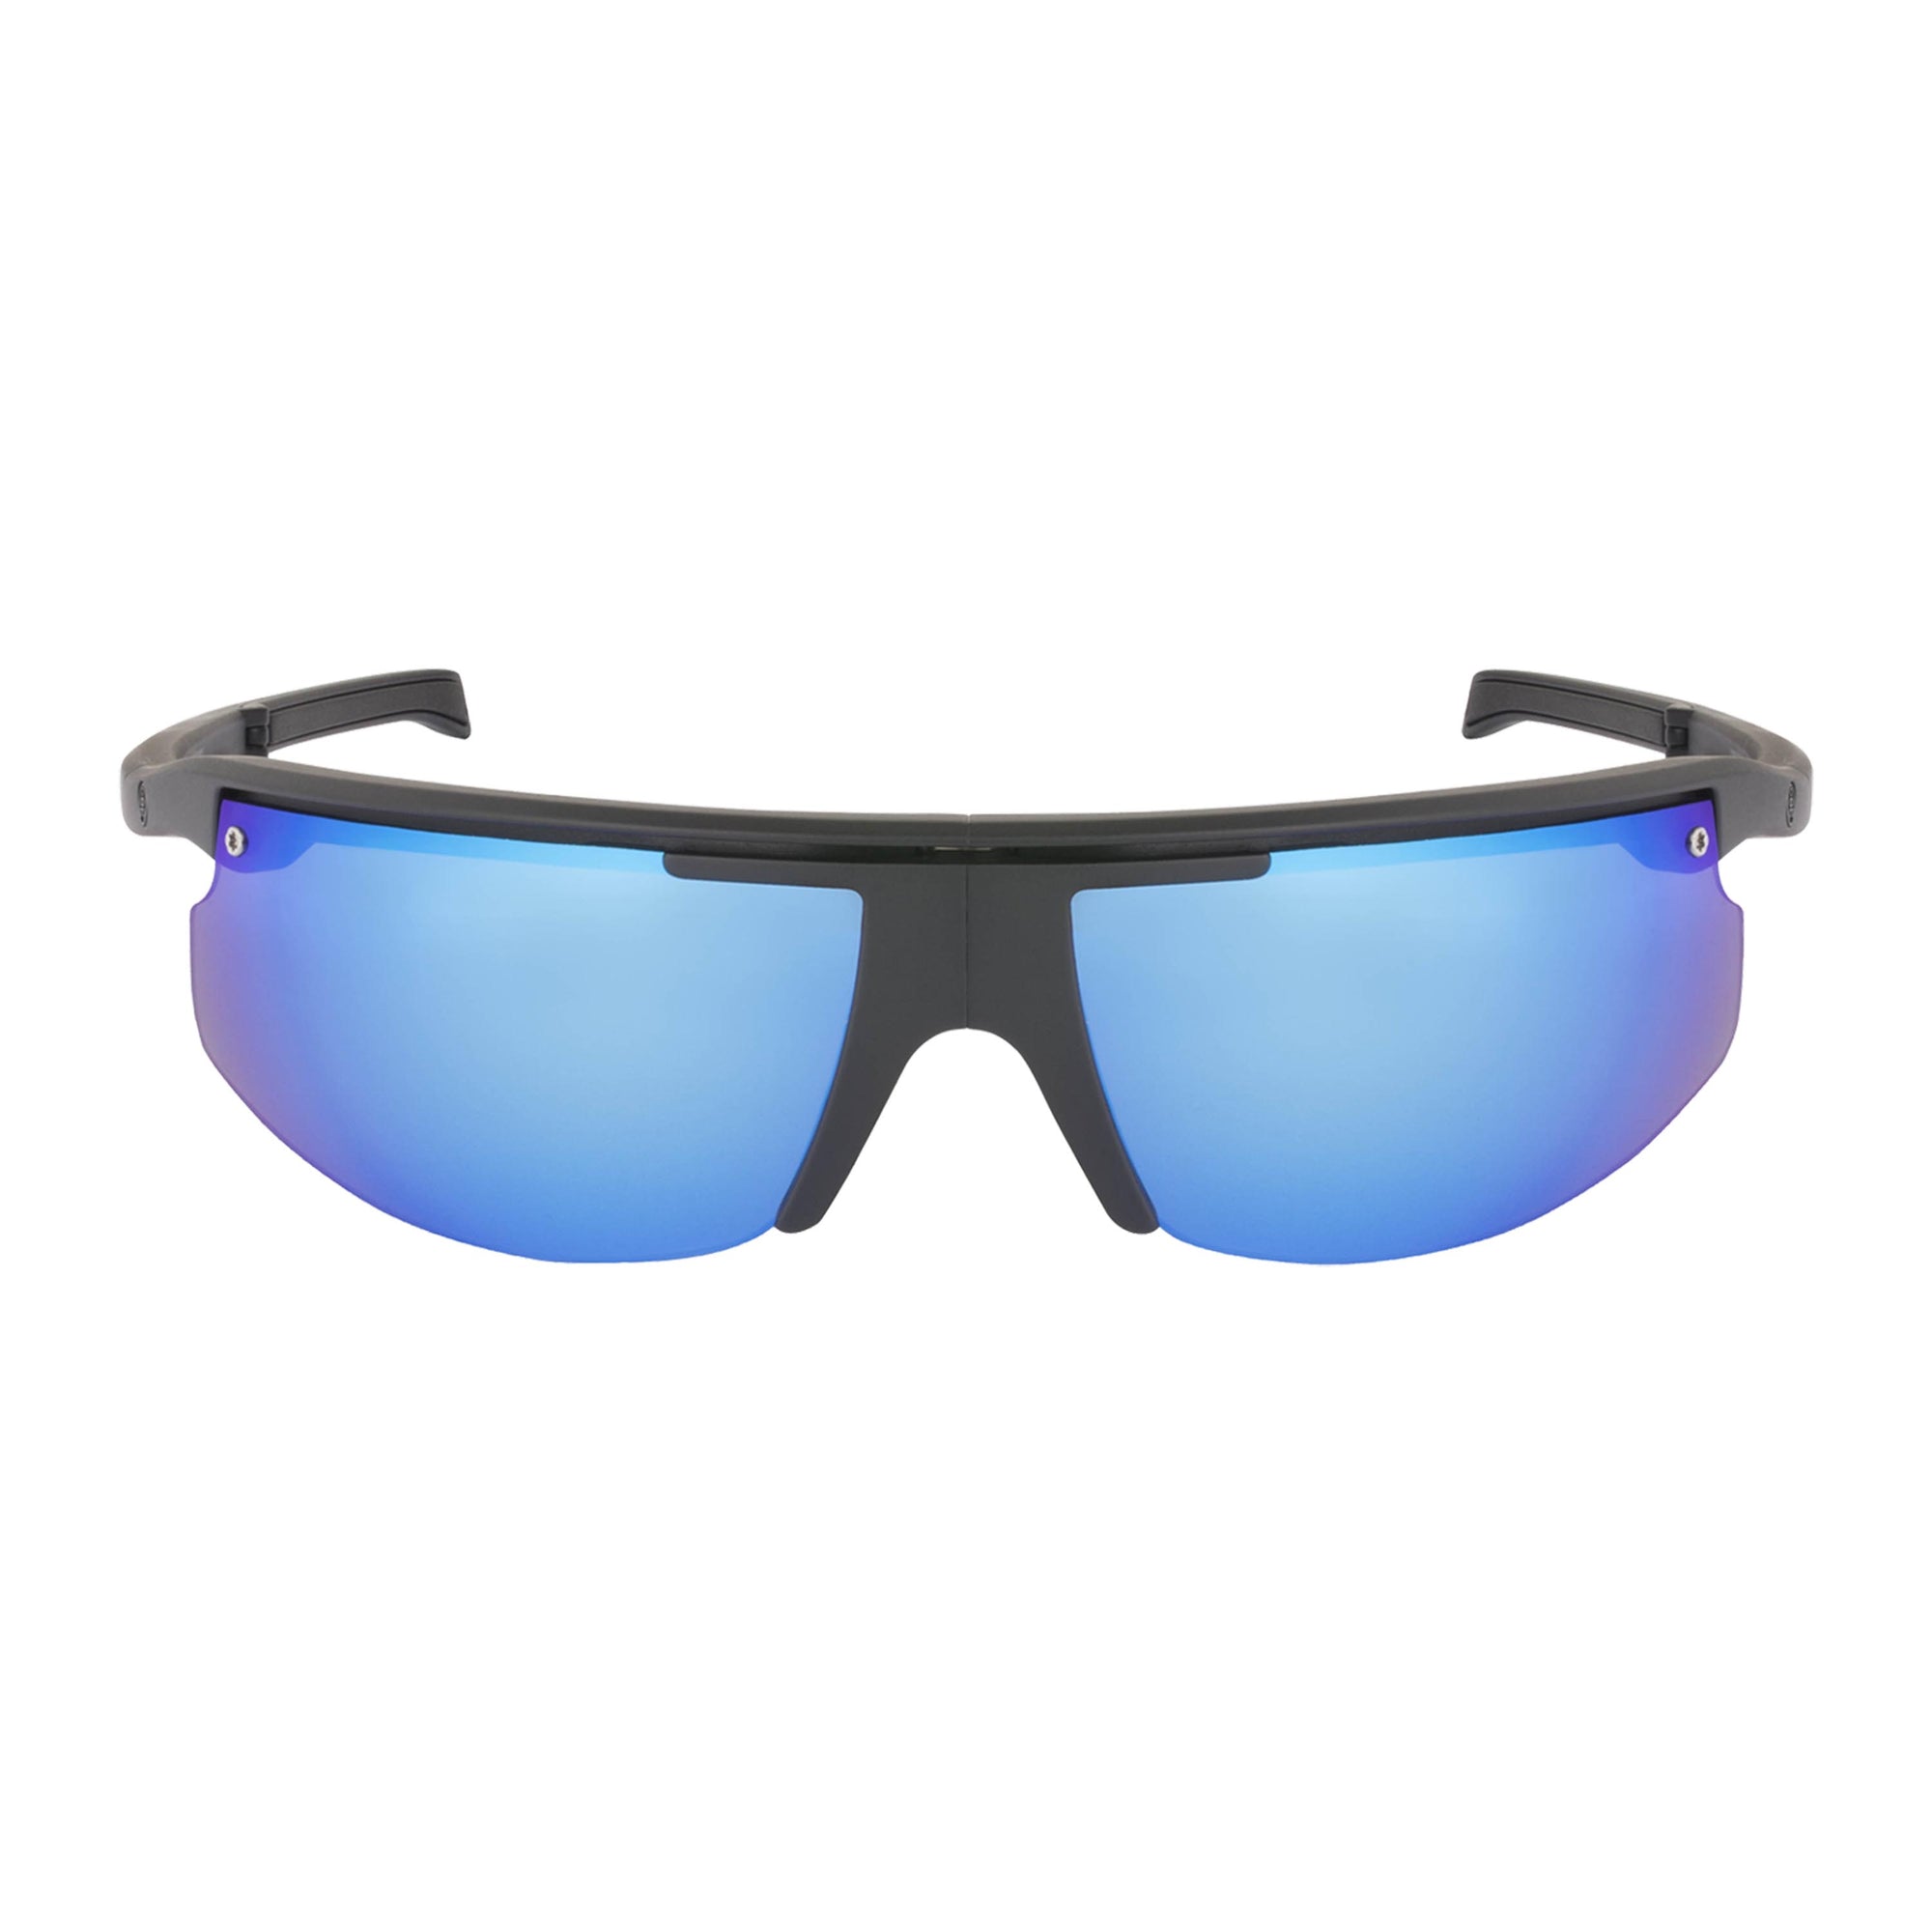 Popticals, Premium Compact Sunglasses, PopStar, 010040-BMUN, Polarized Sunglasses, Matte Black Frame, Gray Lenses w/Blue Mirror Finish, Glam View